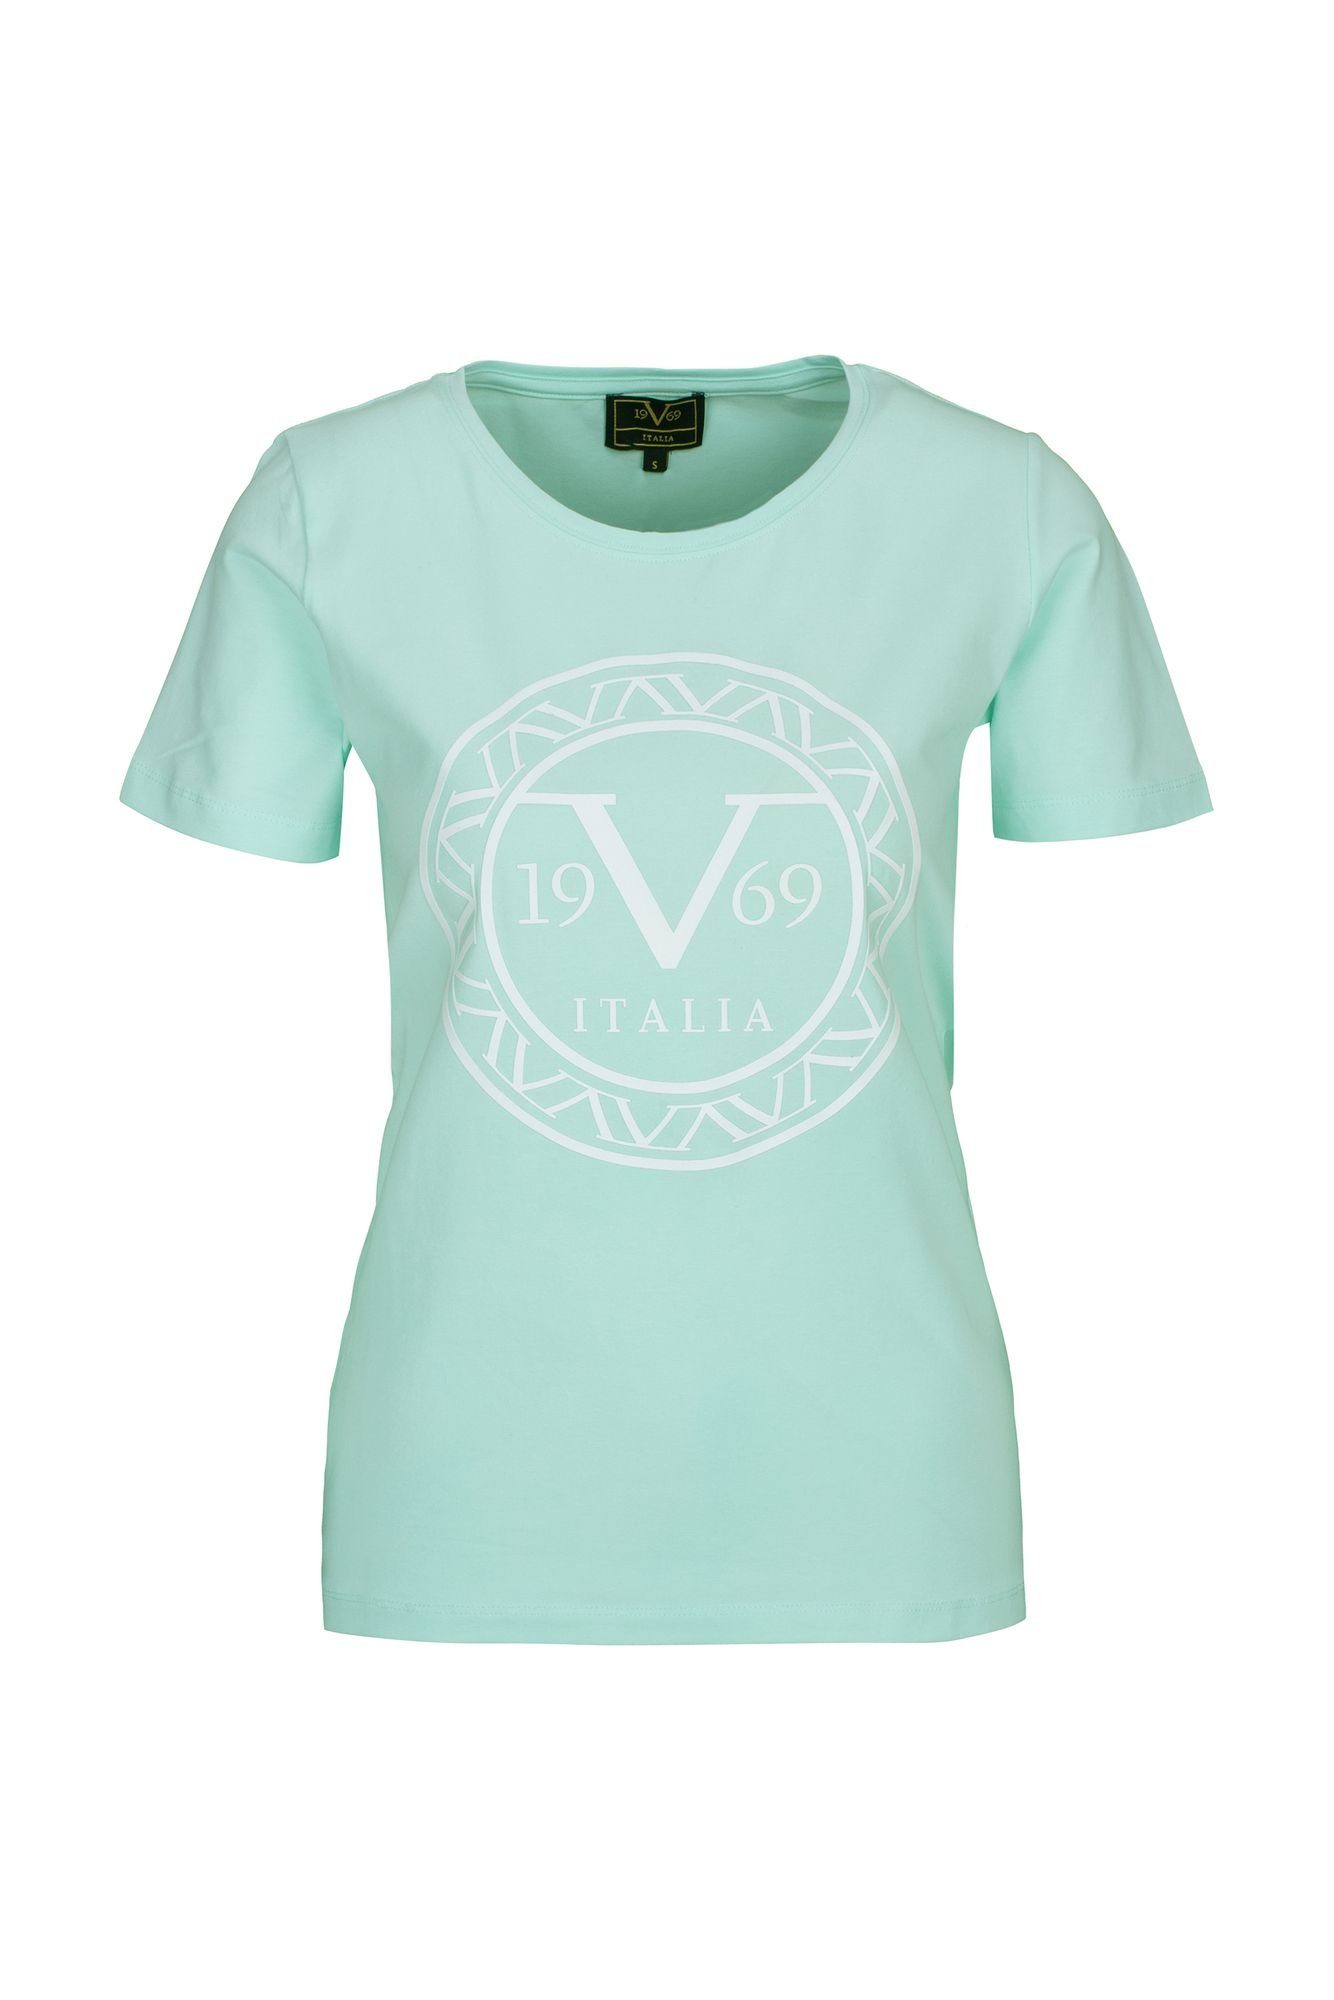 19V69 Italia by Versace T-Shirt Irina